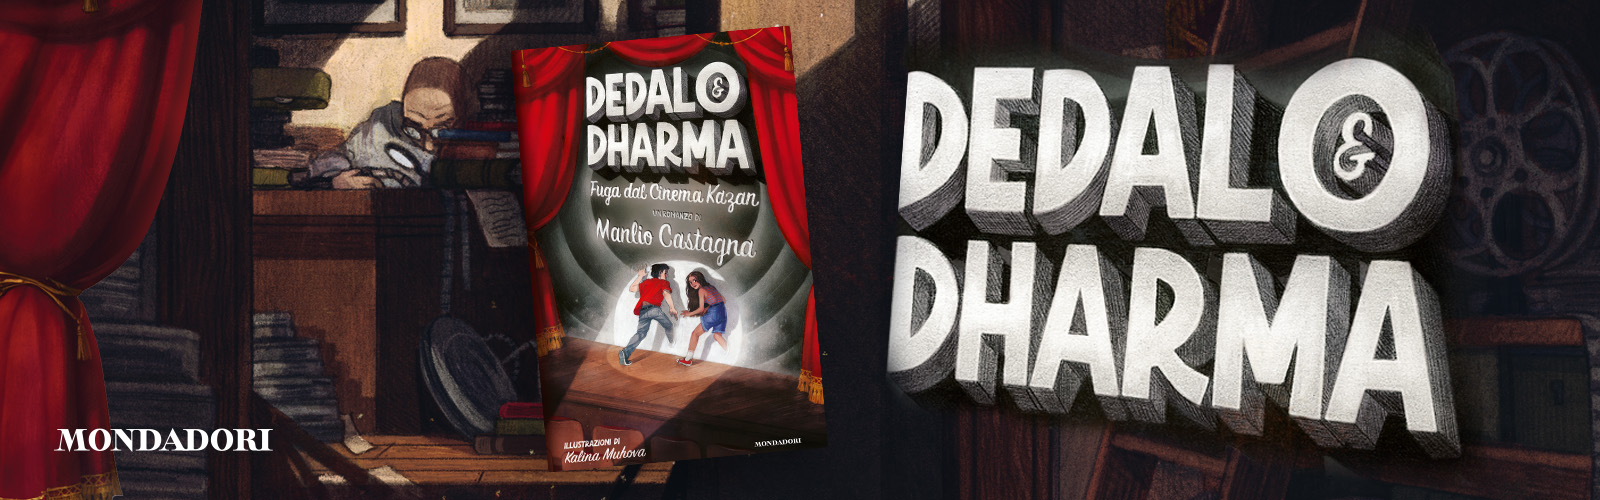 Dedalo& Dharma_Banner